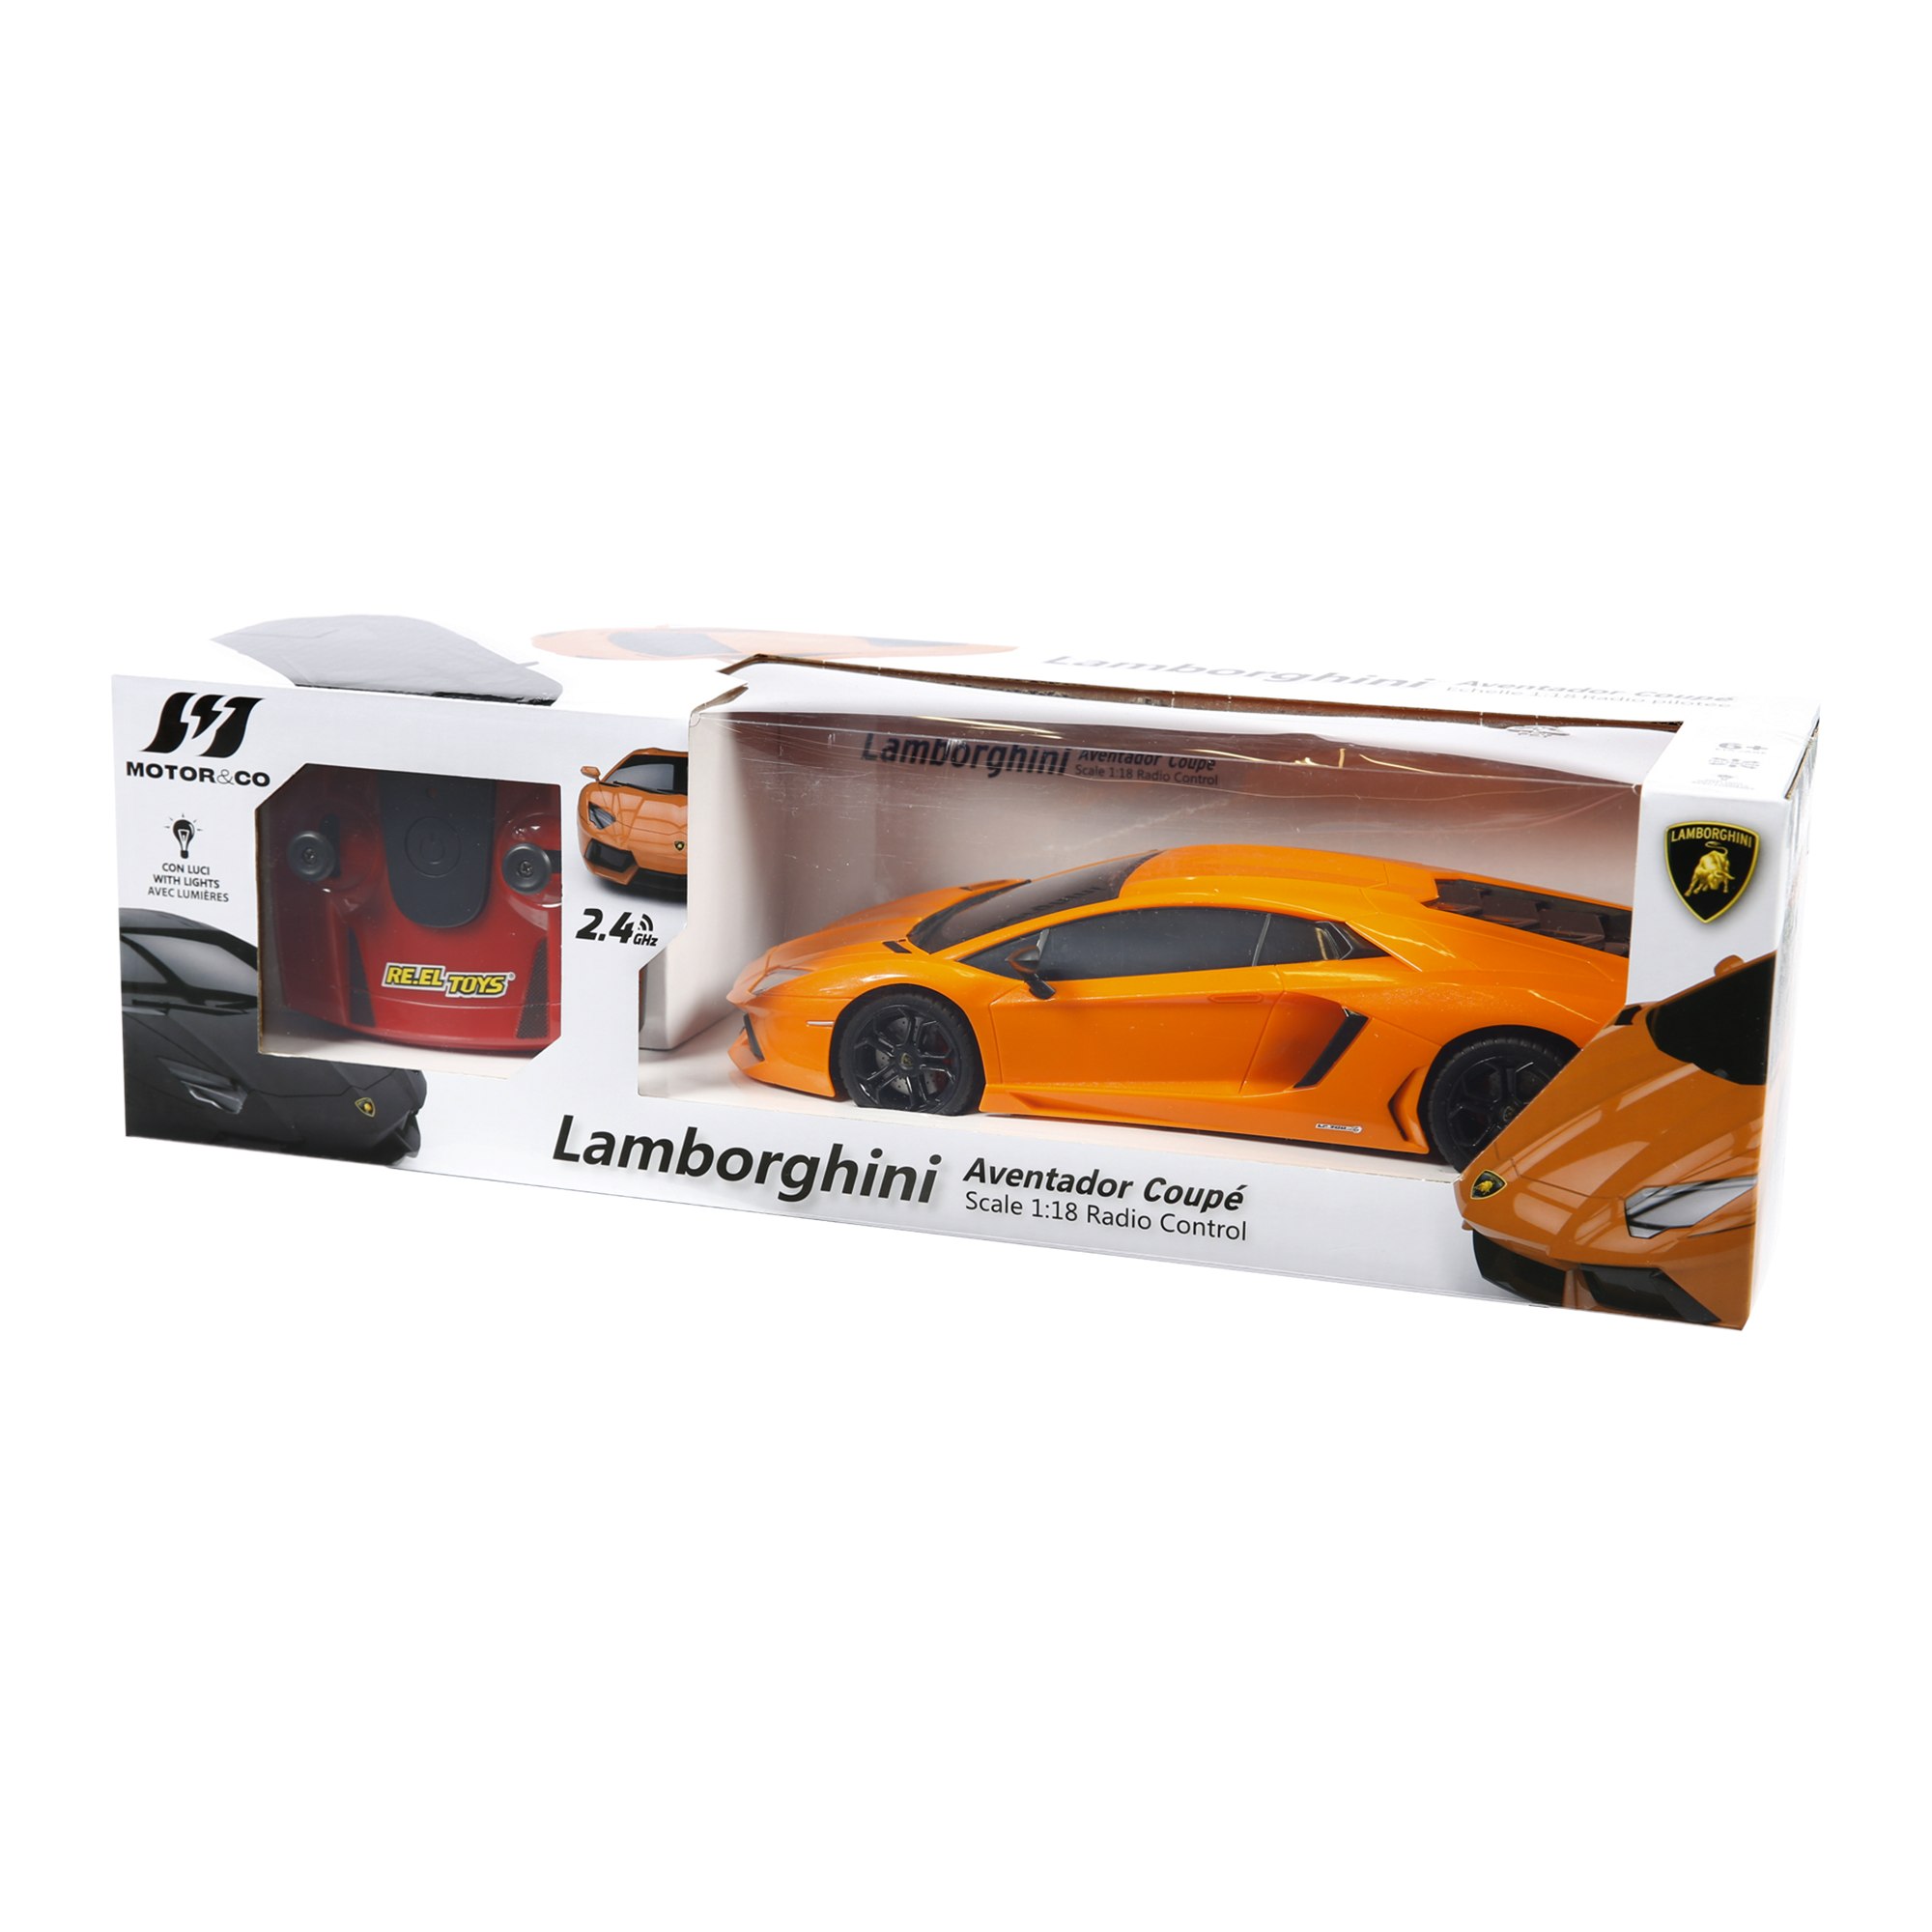 Lamborghini aventador - MOTOR & CO.